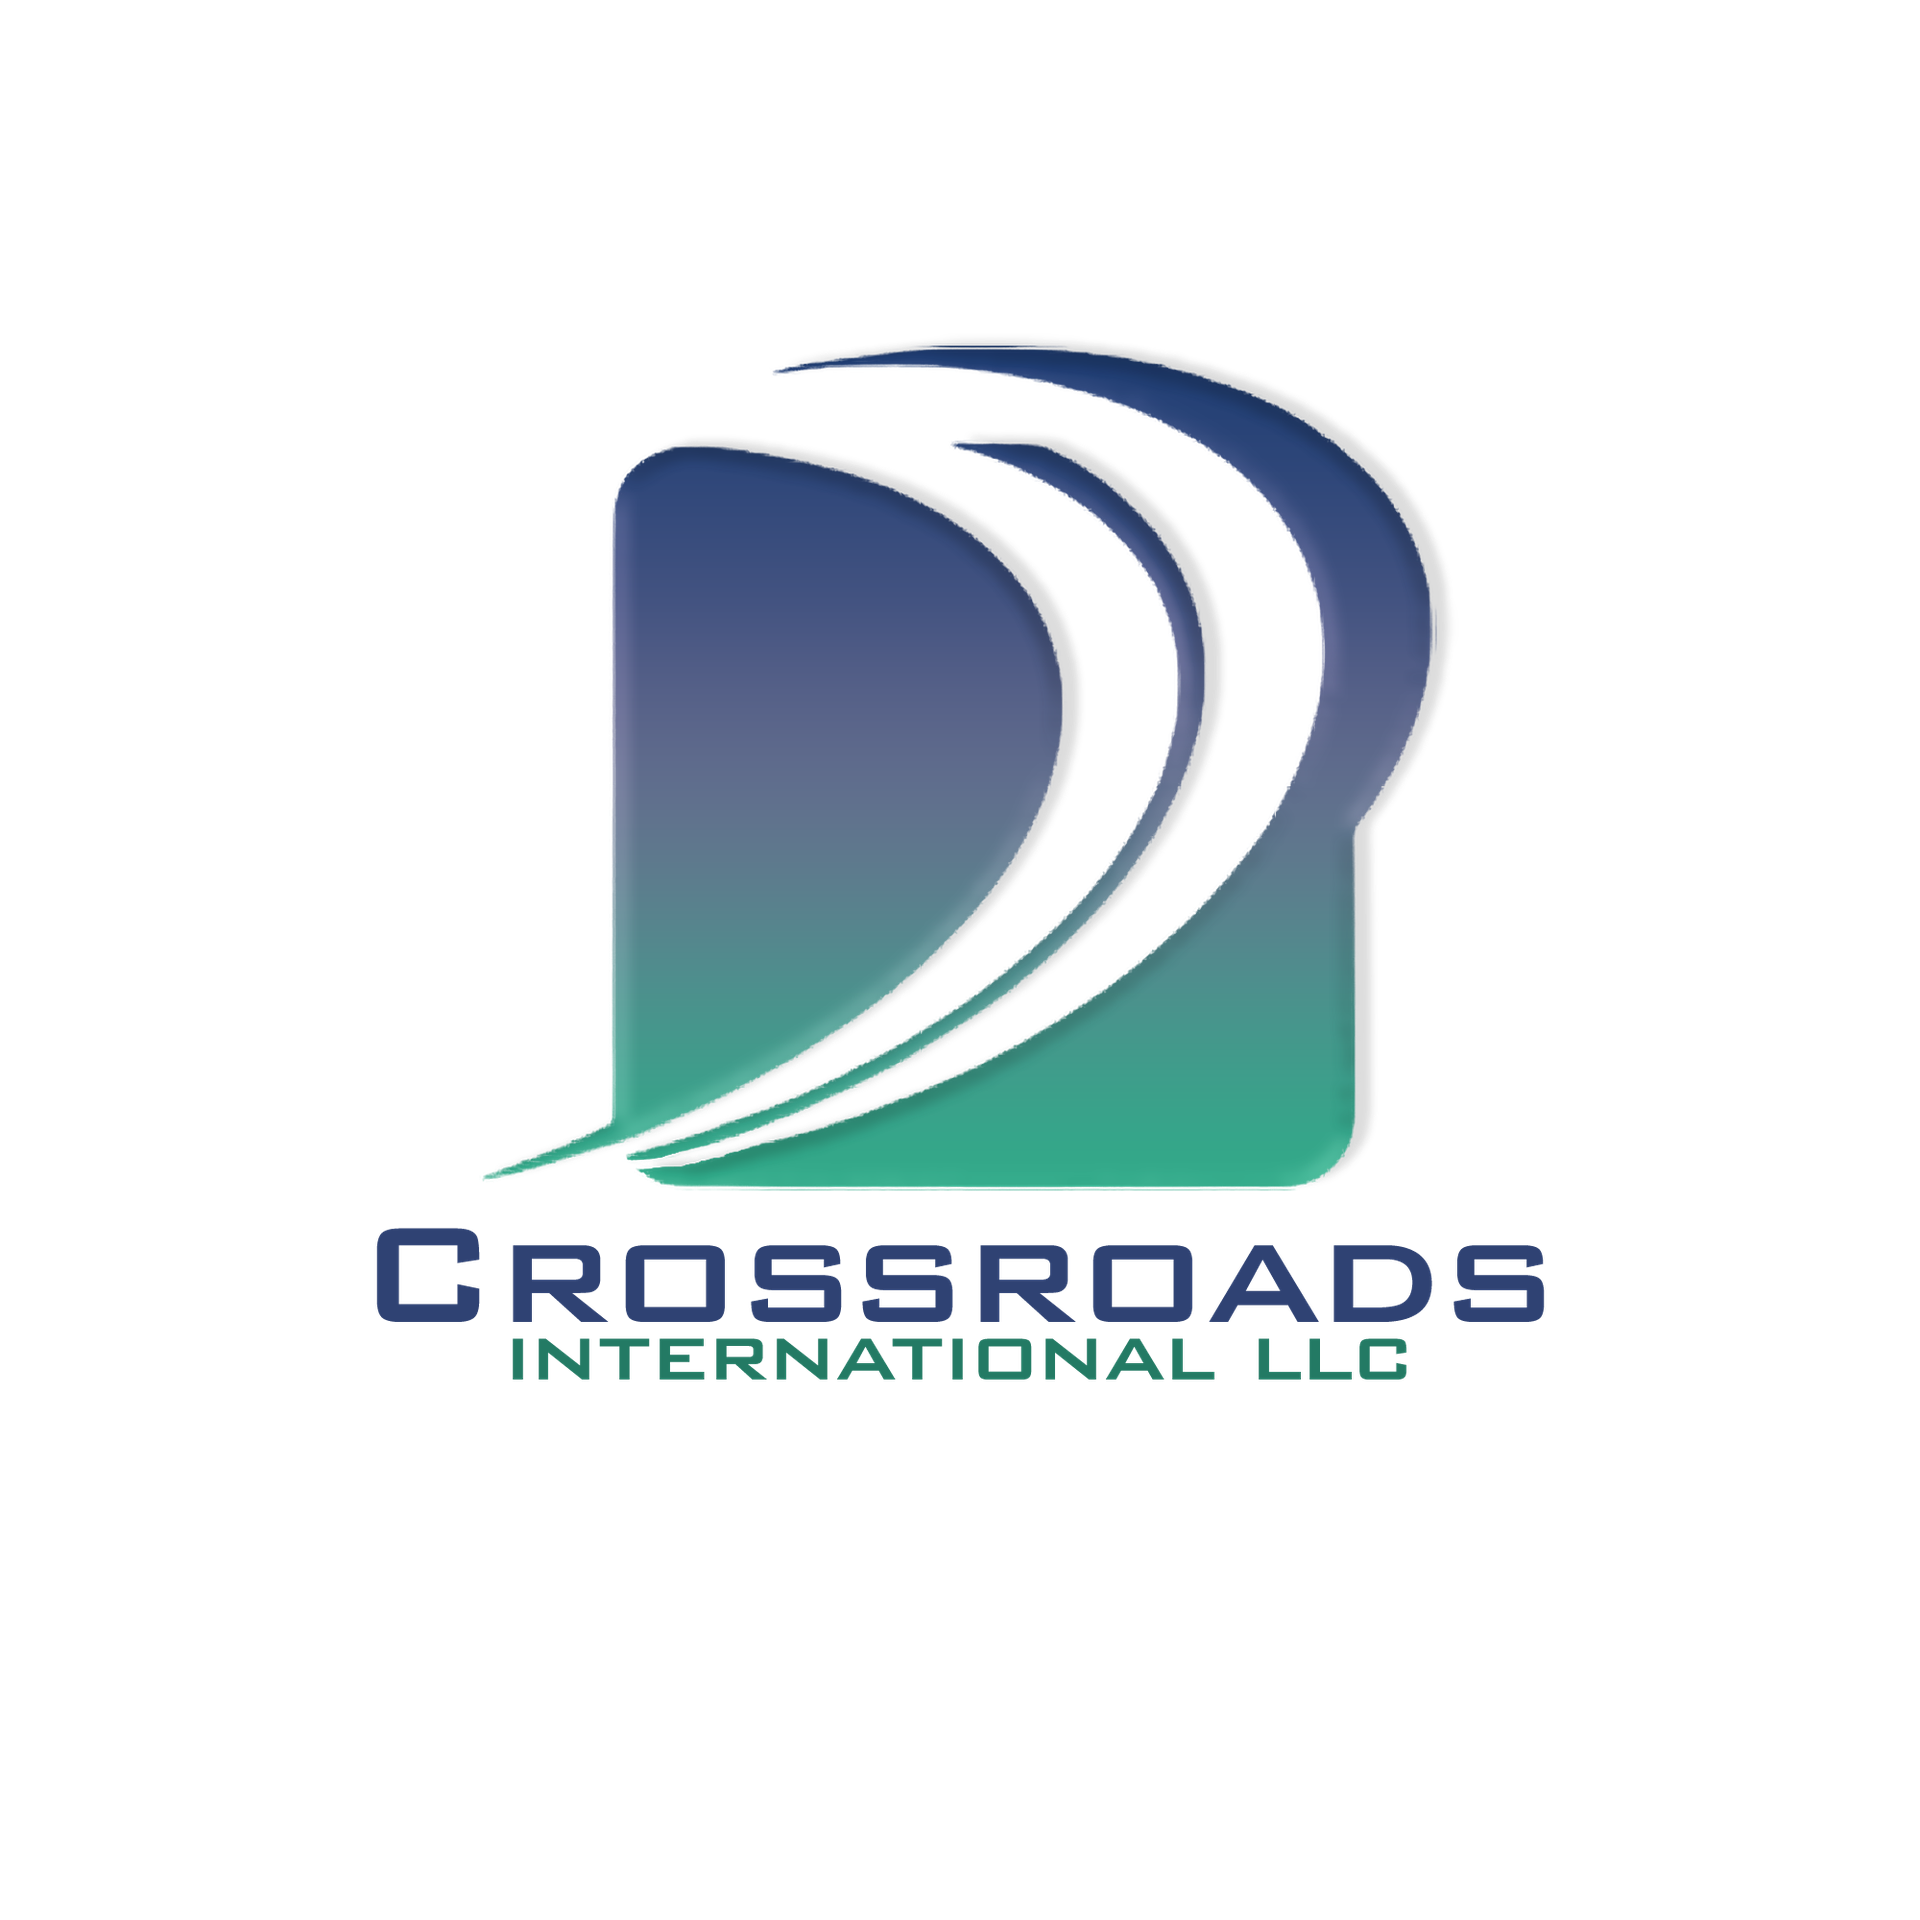 CrossRoads International LLC